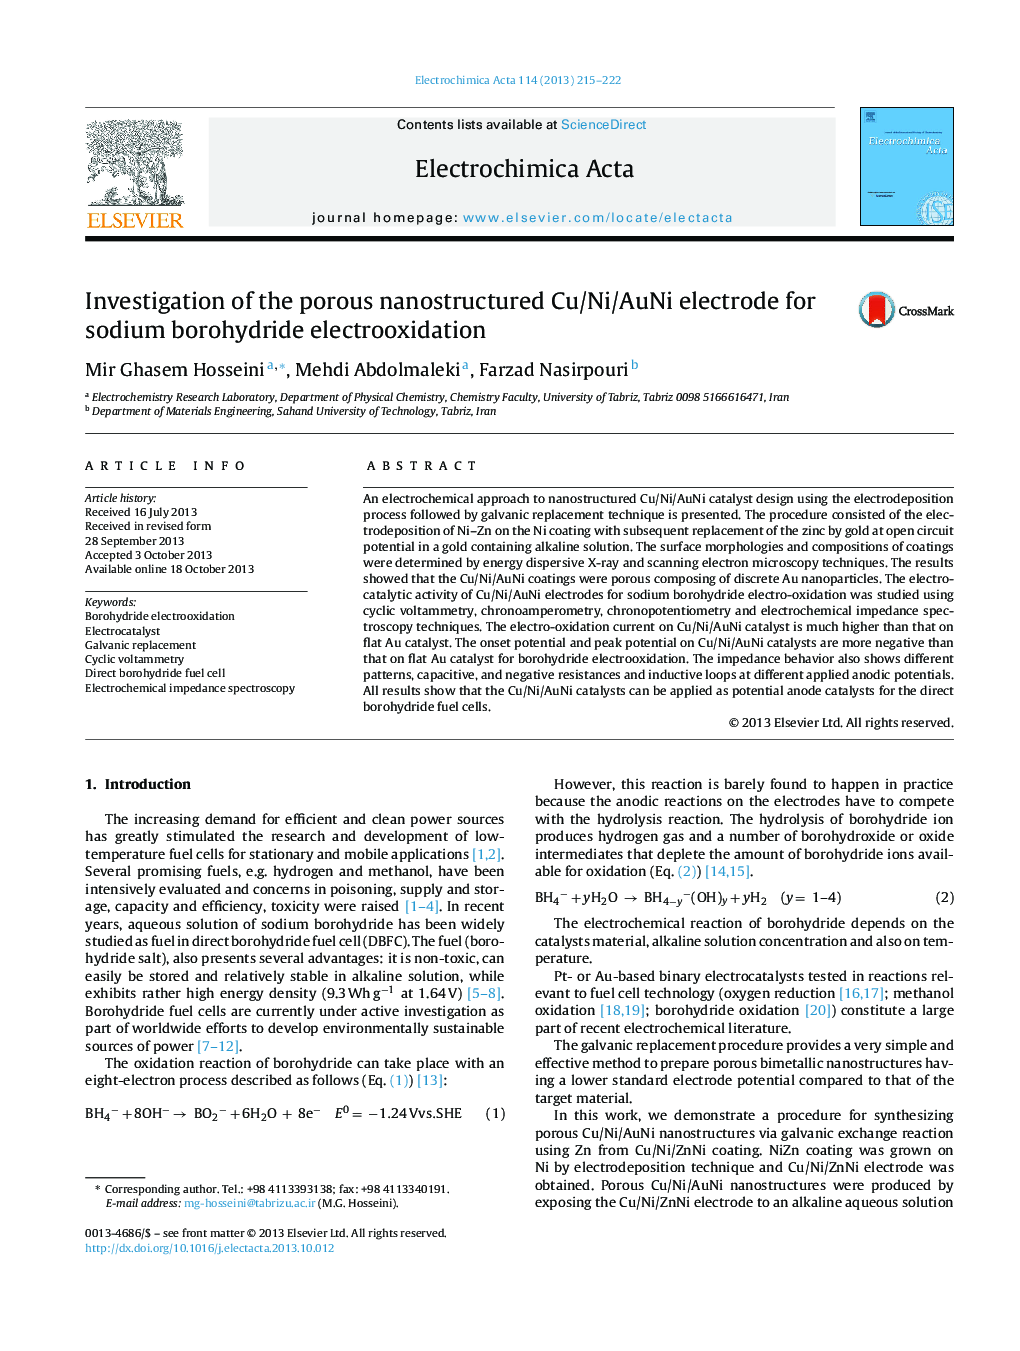 Investigation of the porous nanostructured Cu/Ni/AuNi electrode for sodium borohydride electrooxidation